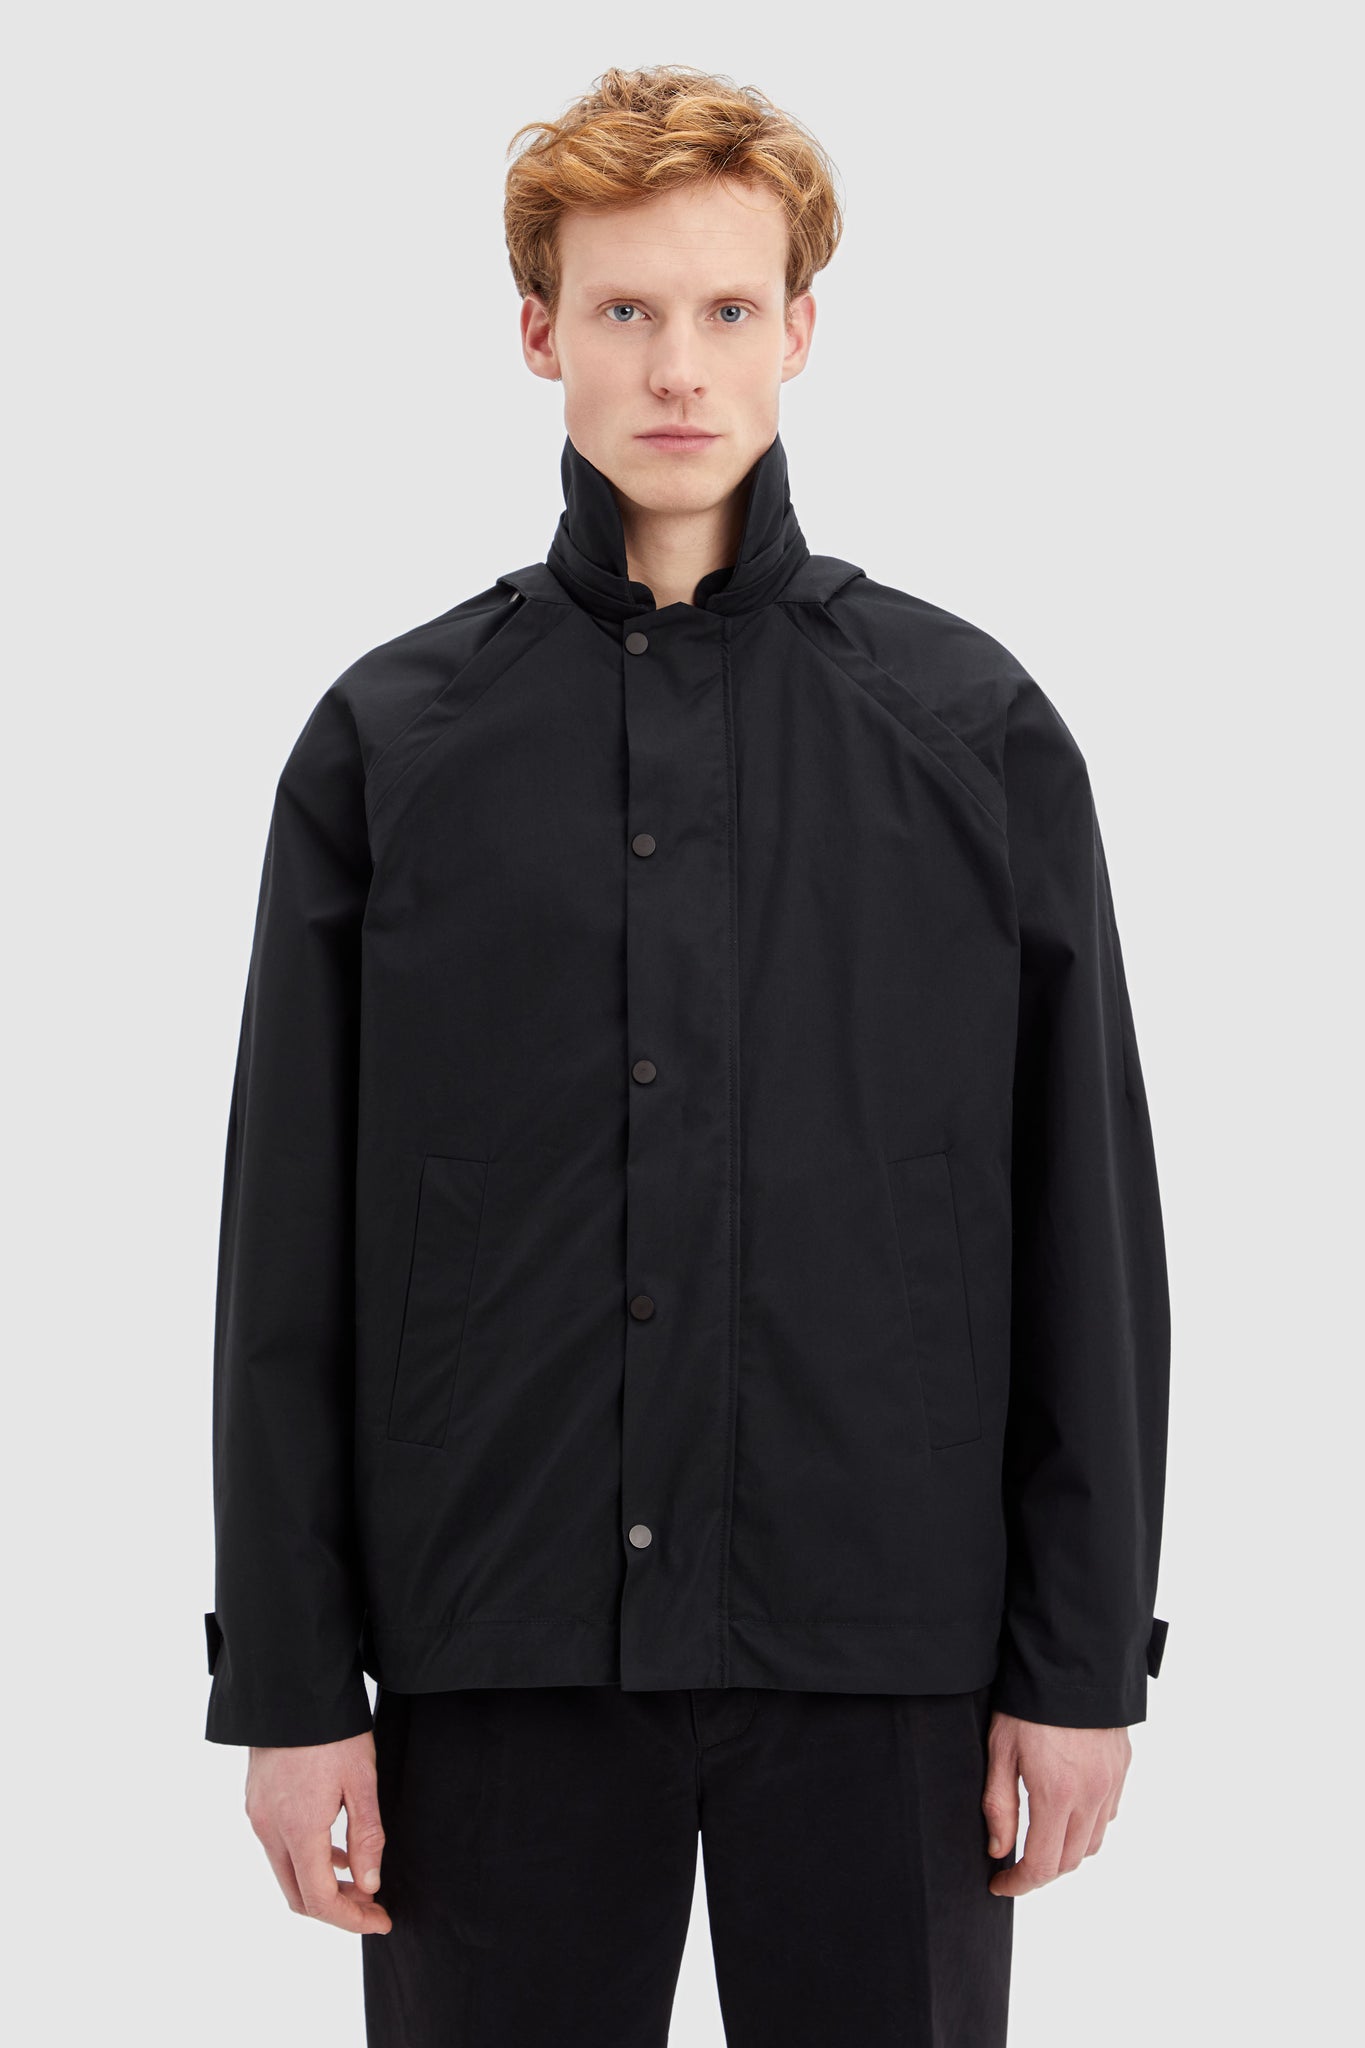 100% Organic Cotton Jacket in colour black  